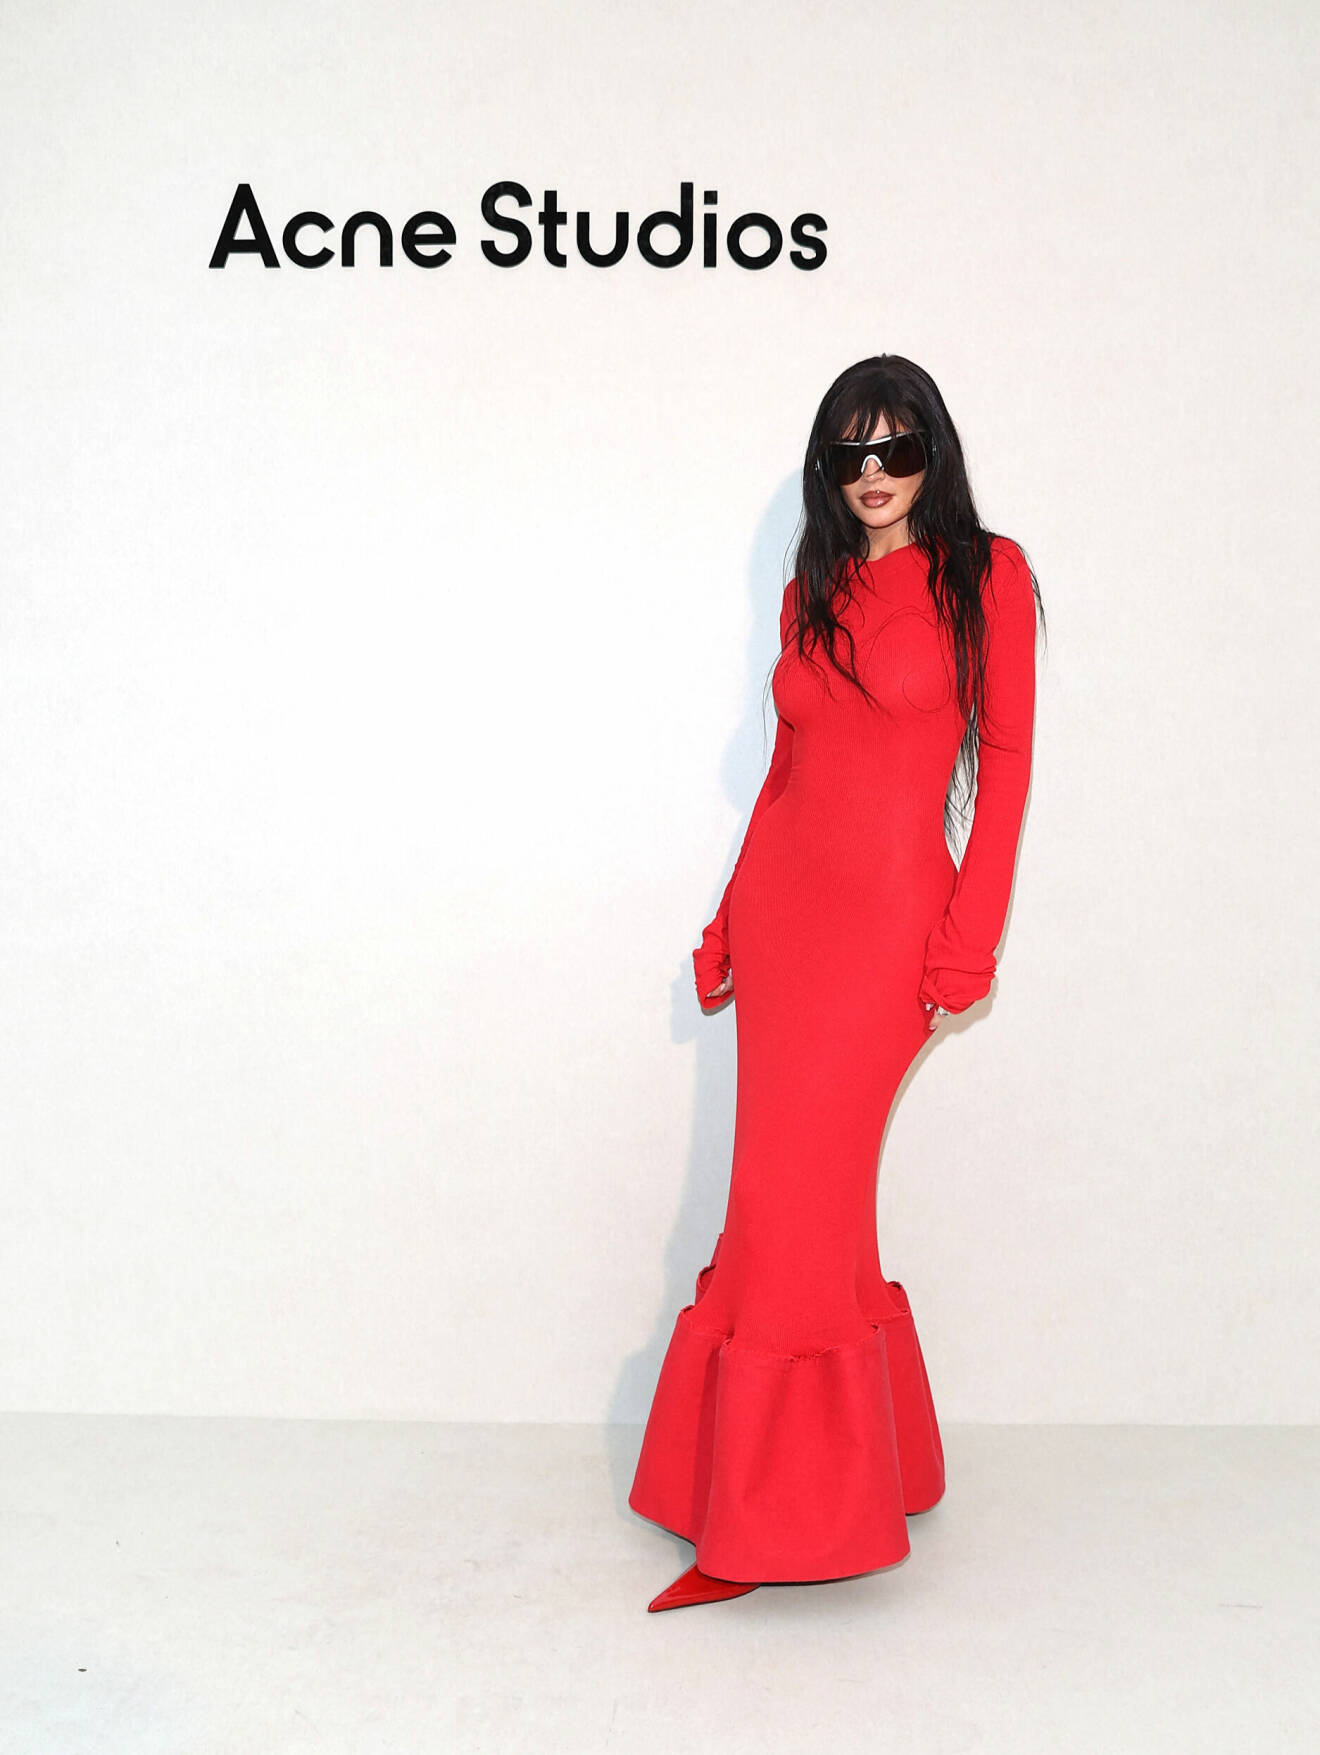 Kylie i en full outfit från Acne studios.